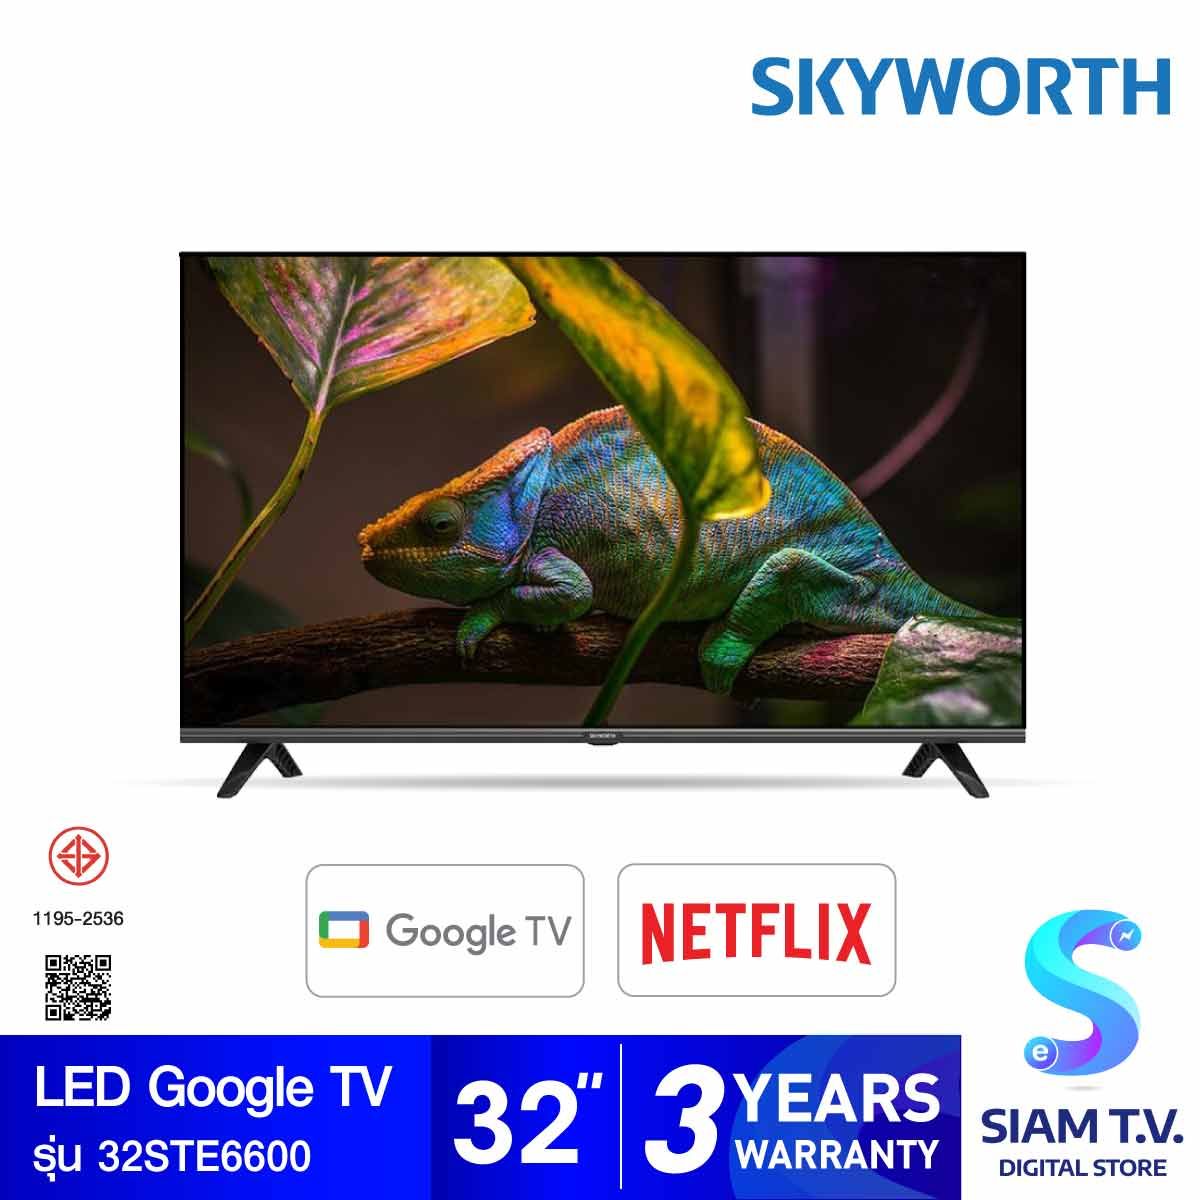 SKYWORTH LED Google TV รุ่น 32STE6600 สมาร์ททีวี ขนาด 32 นิ้ว